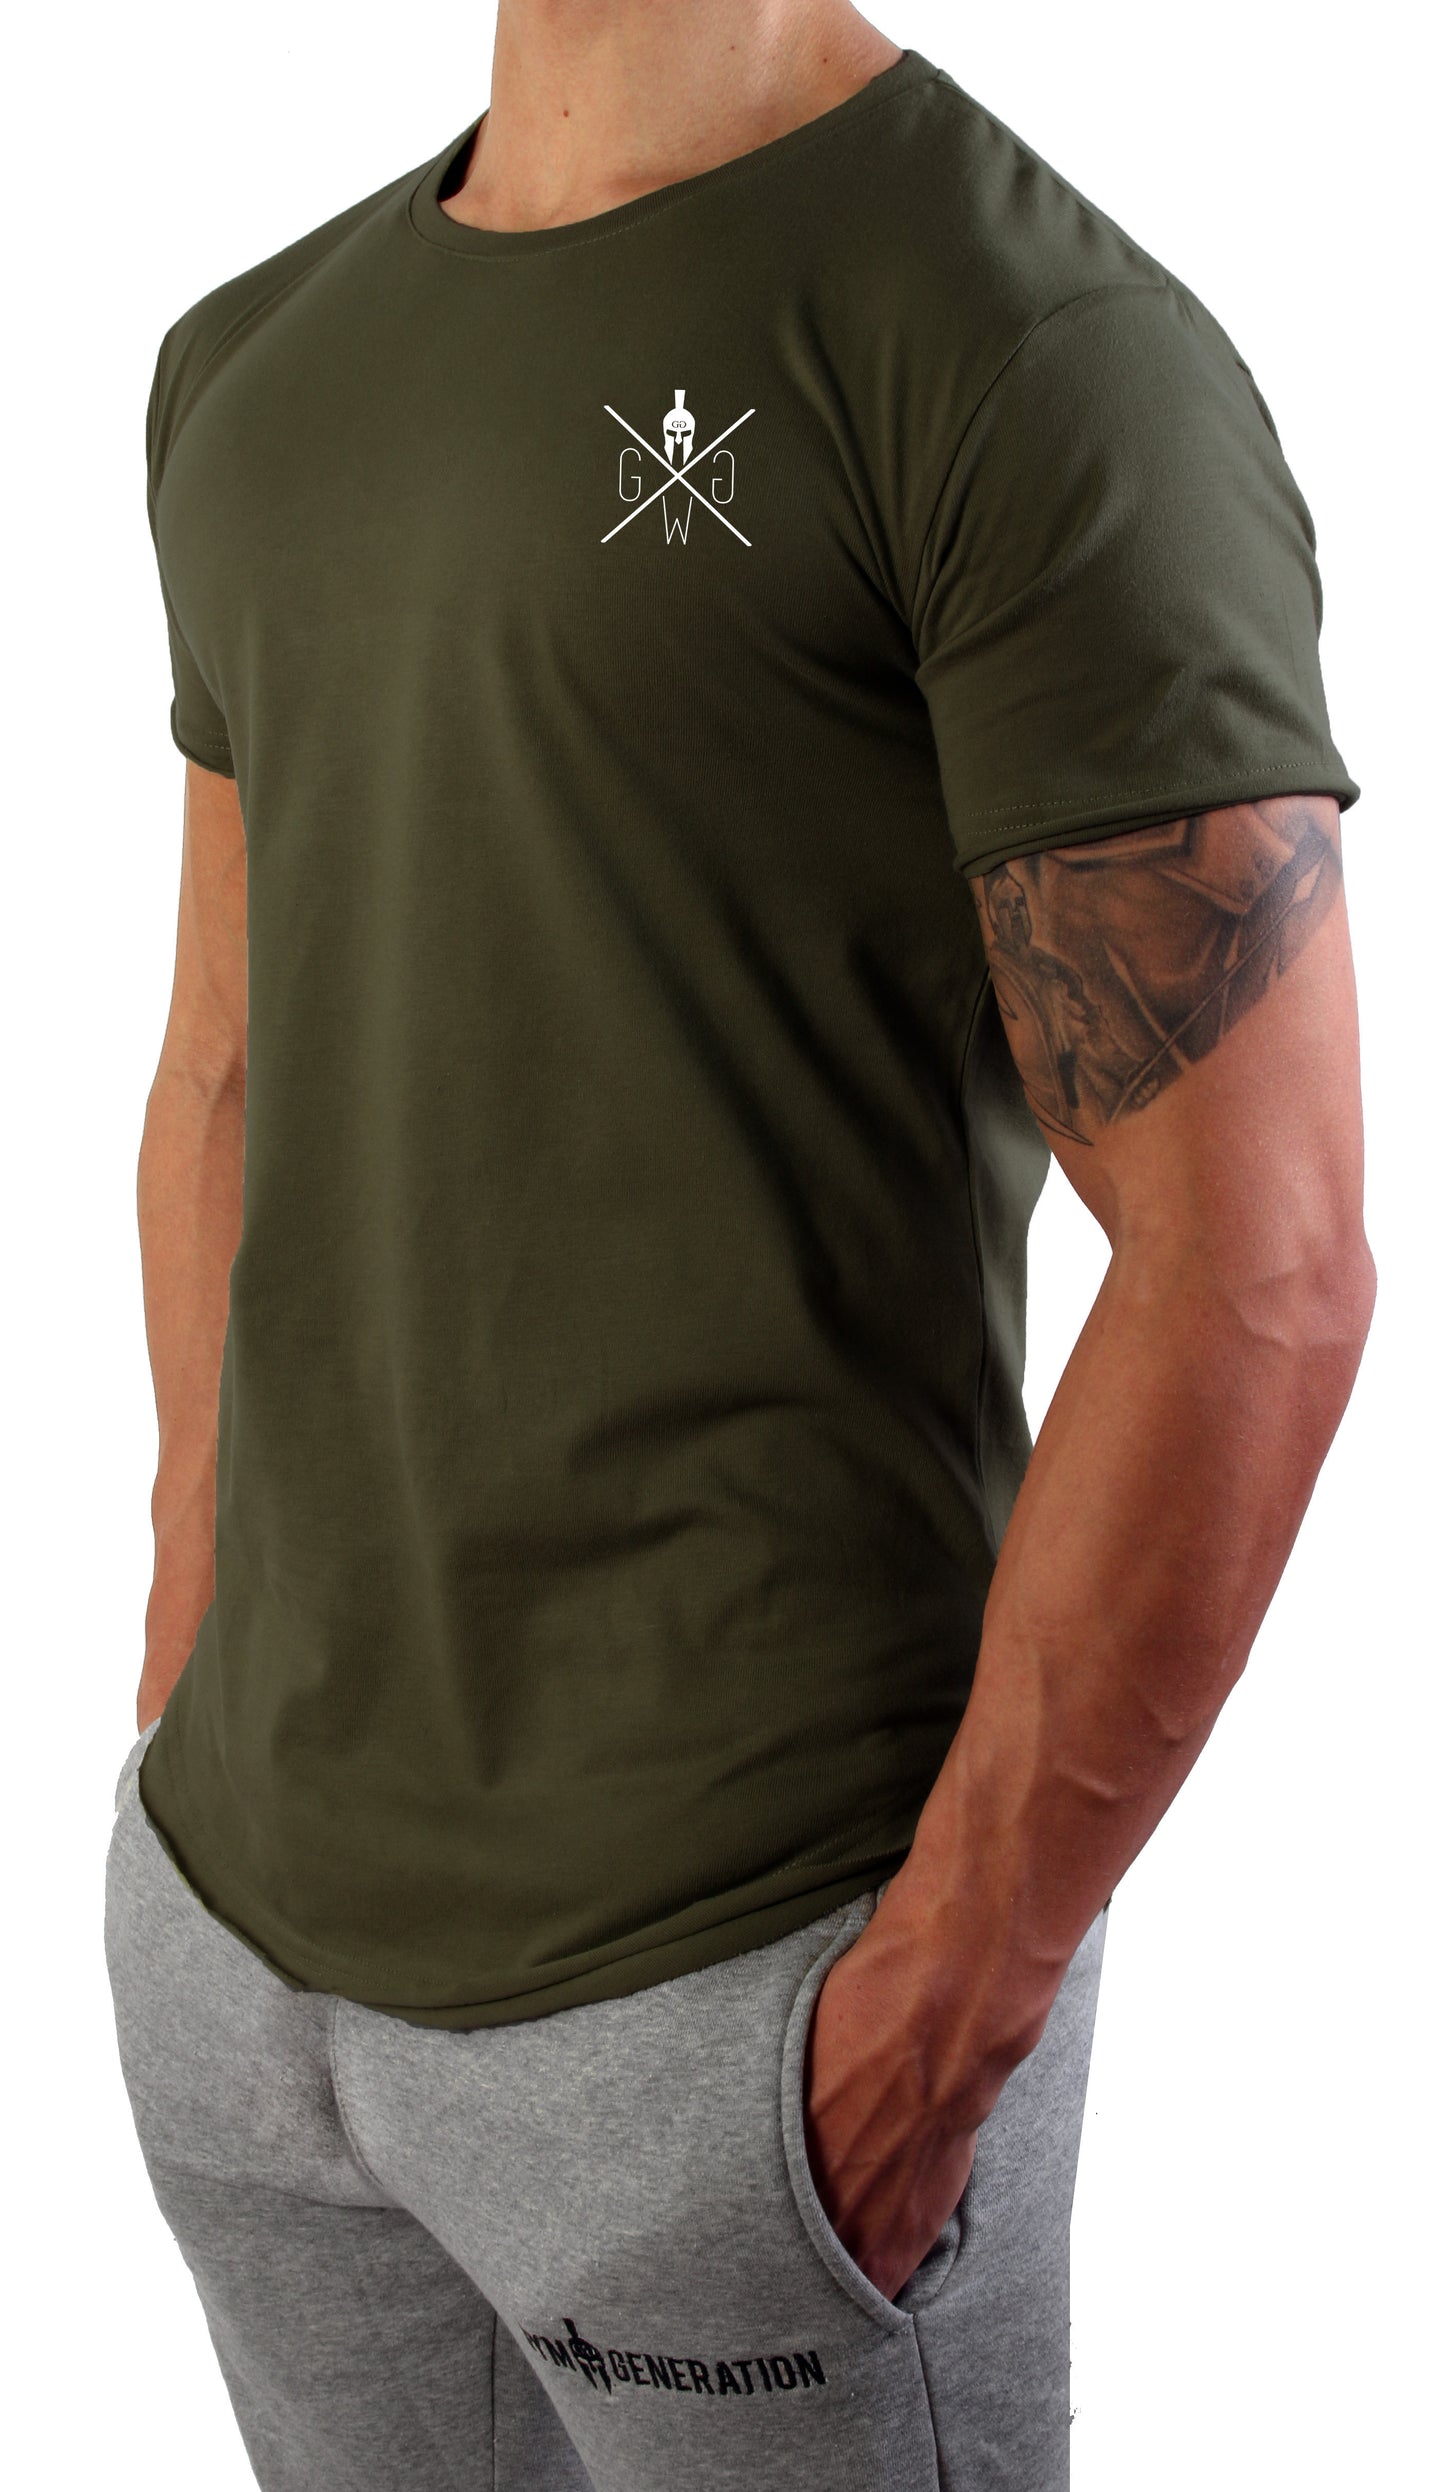 Warrior 89 T-Shirt - Olive